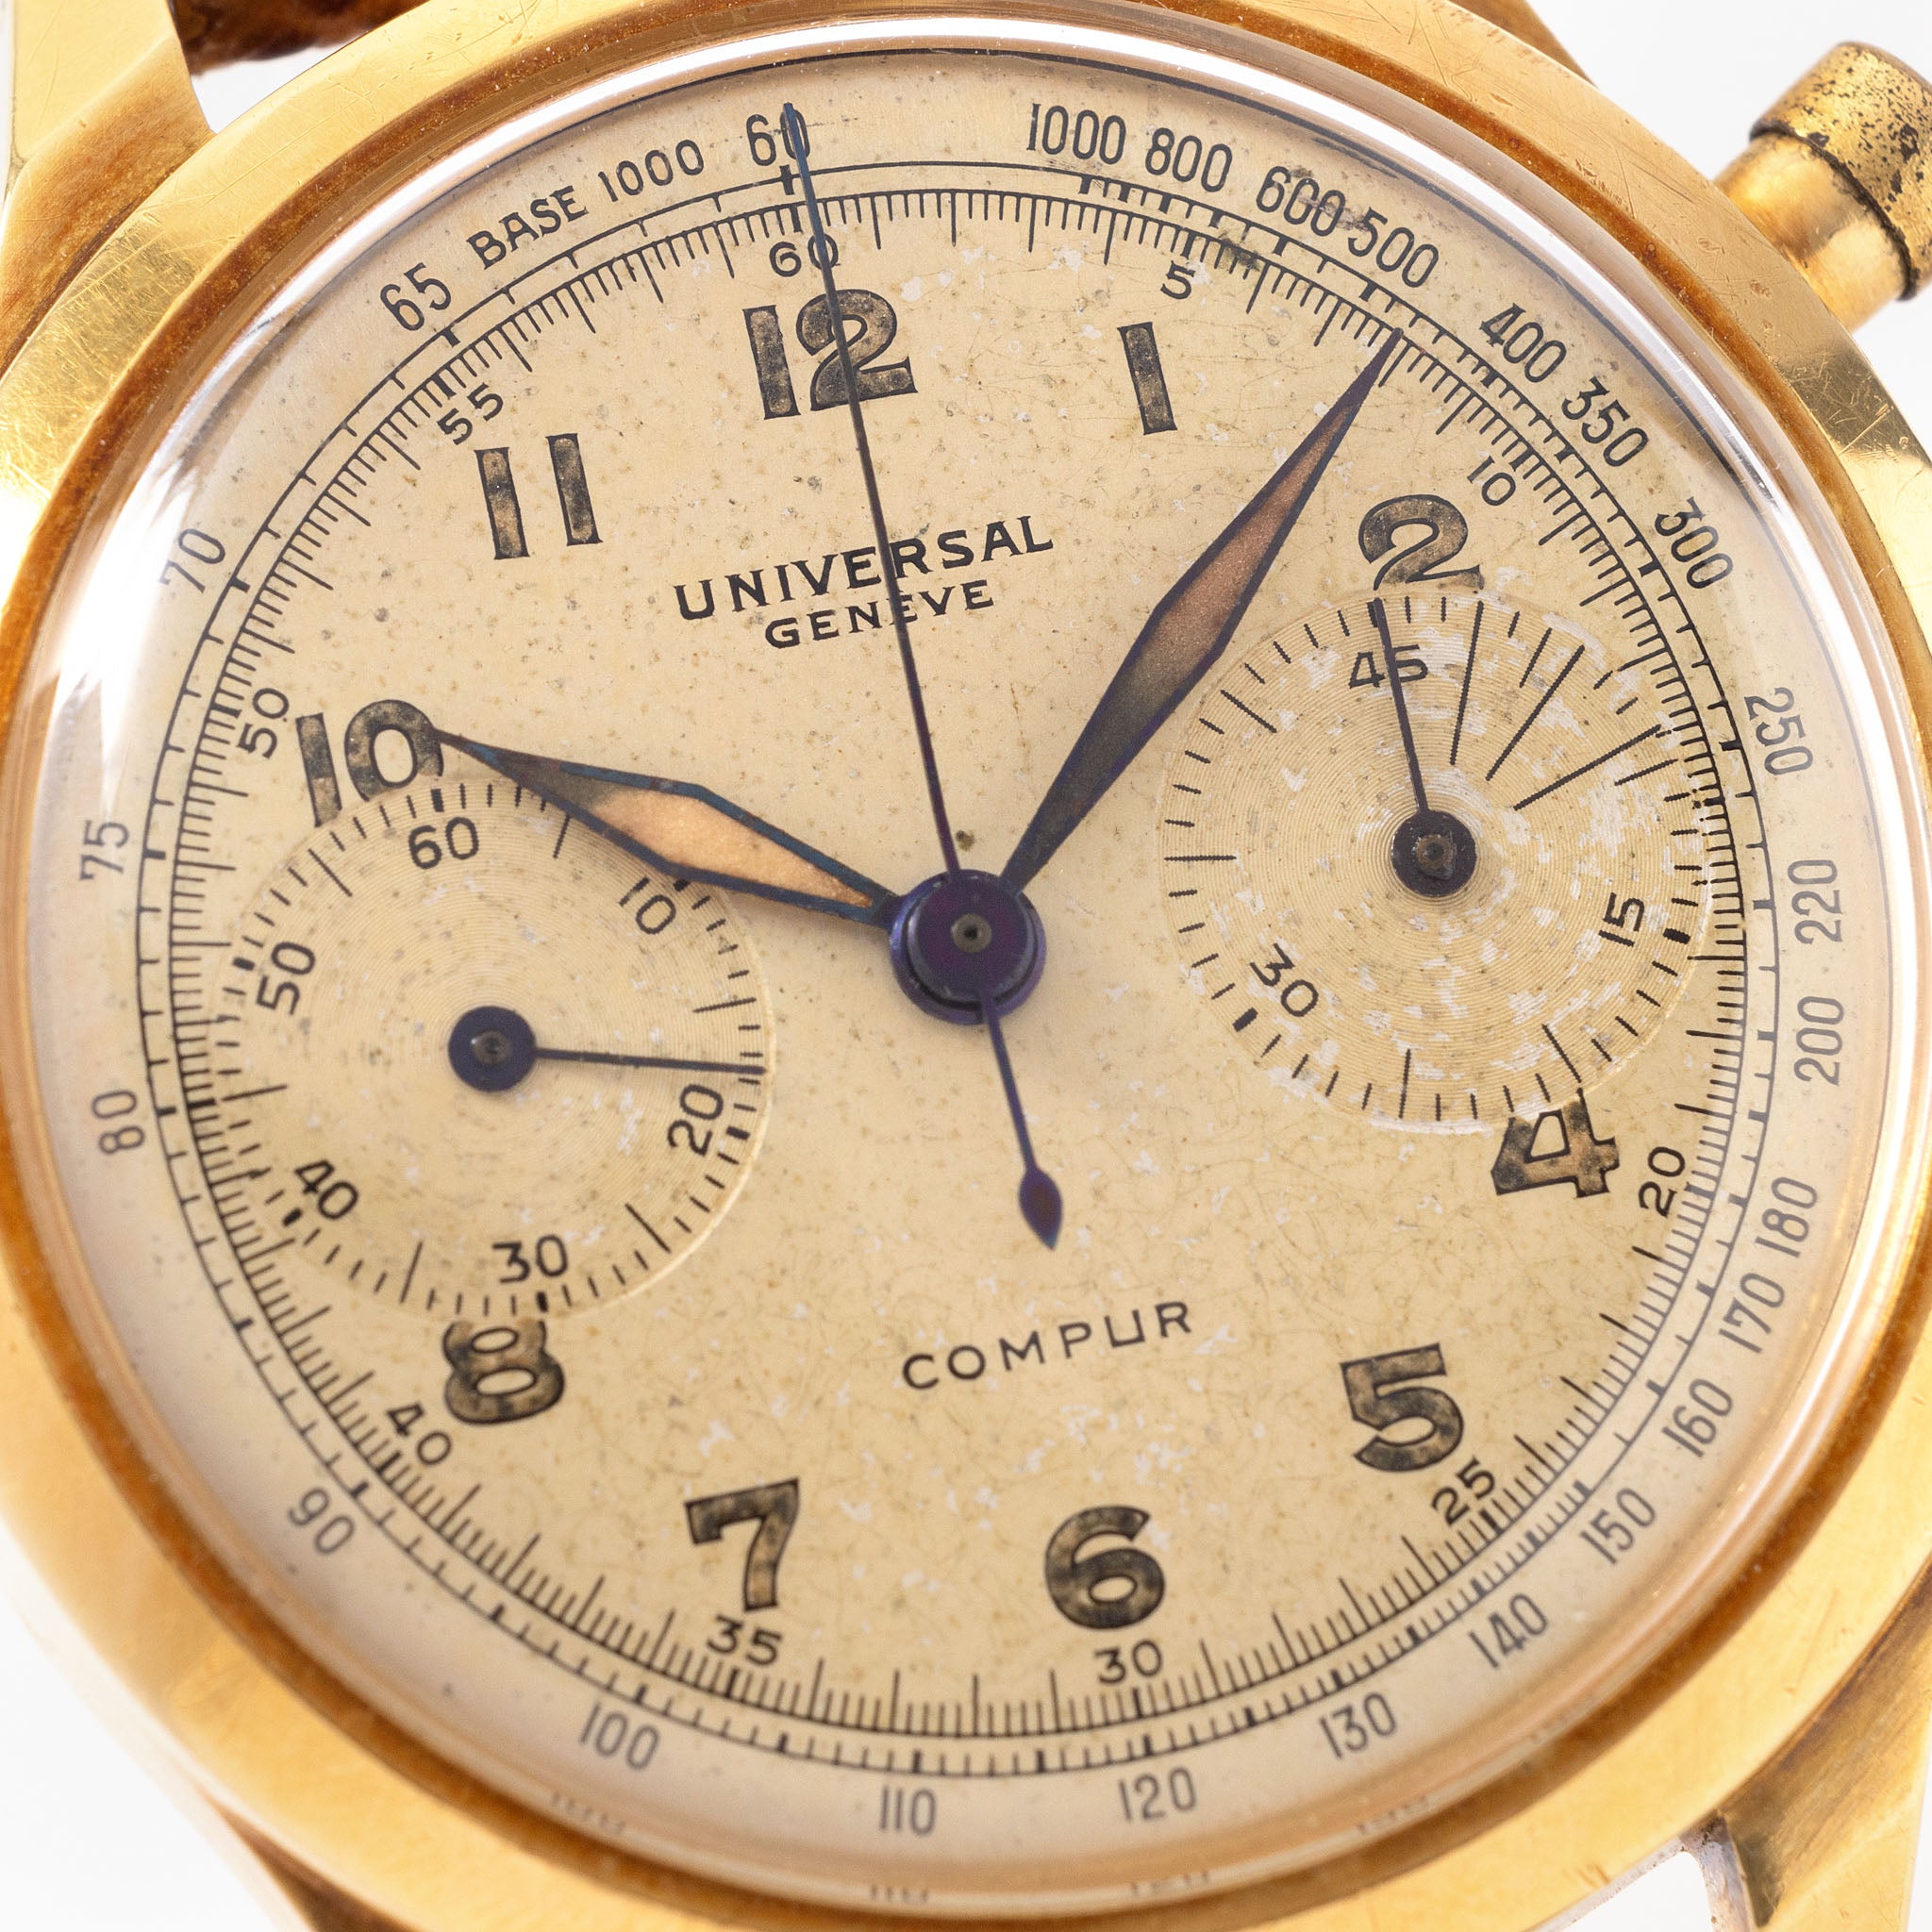 Universal Geneve Compur Chronograph 18kt Gold Ref 12430 Spillmann case